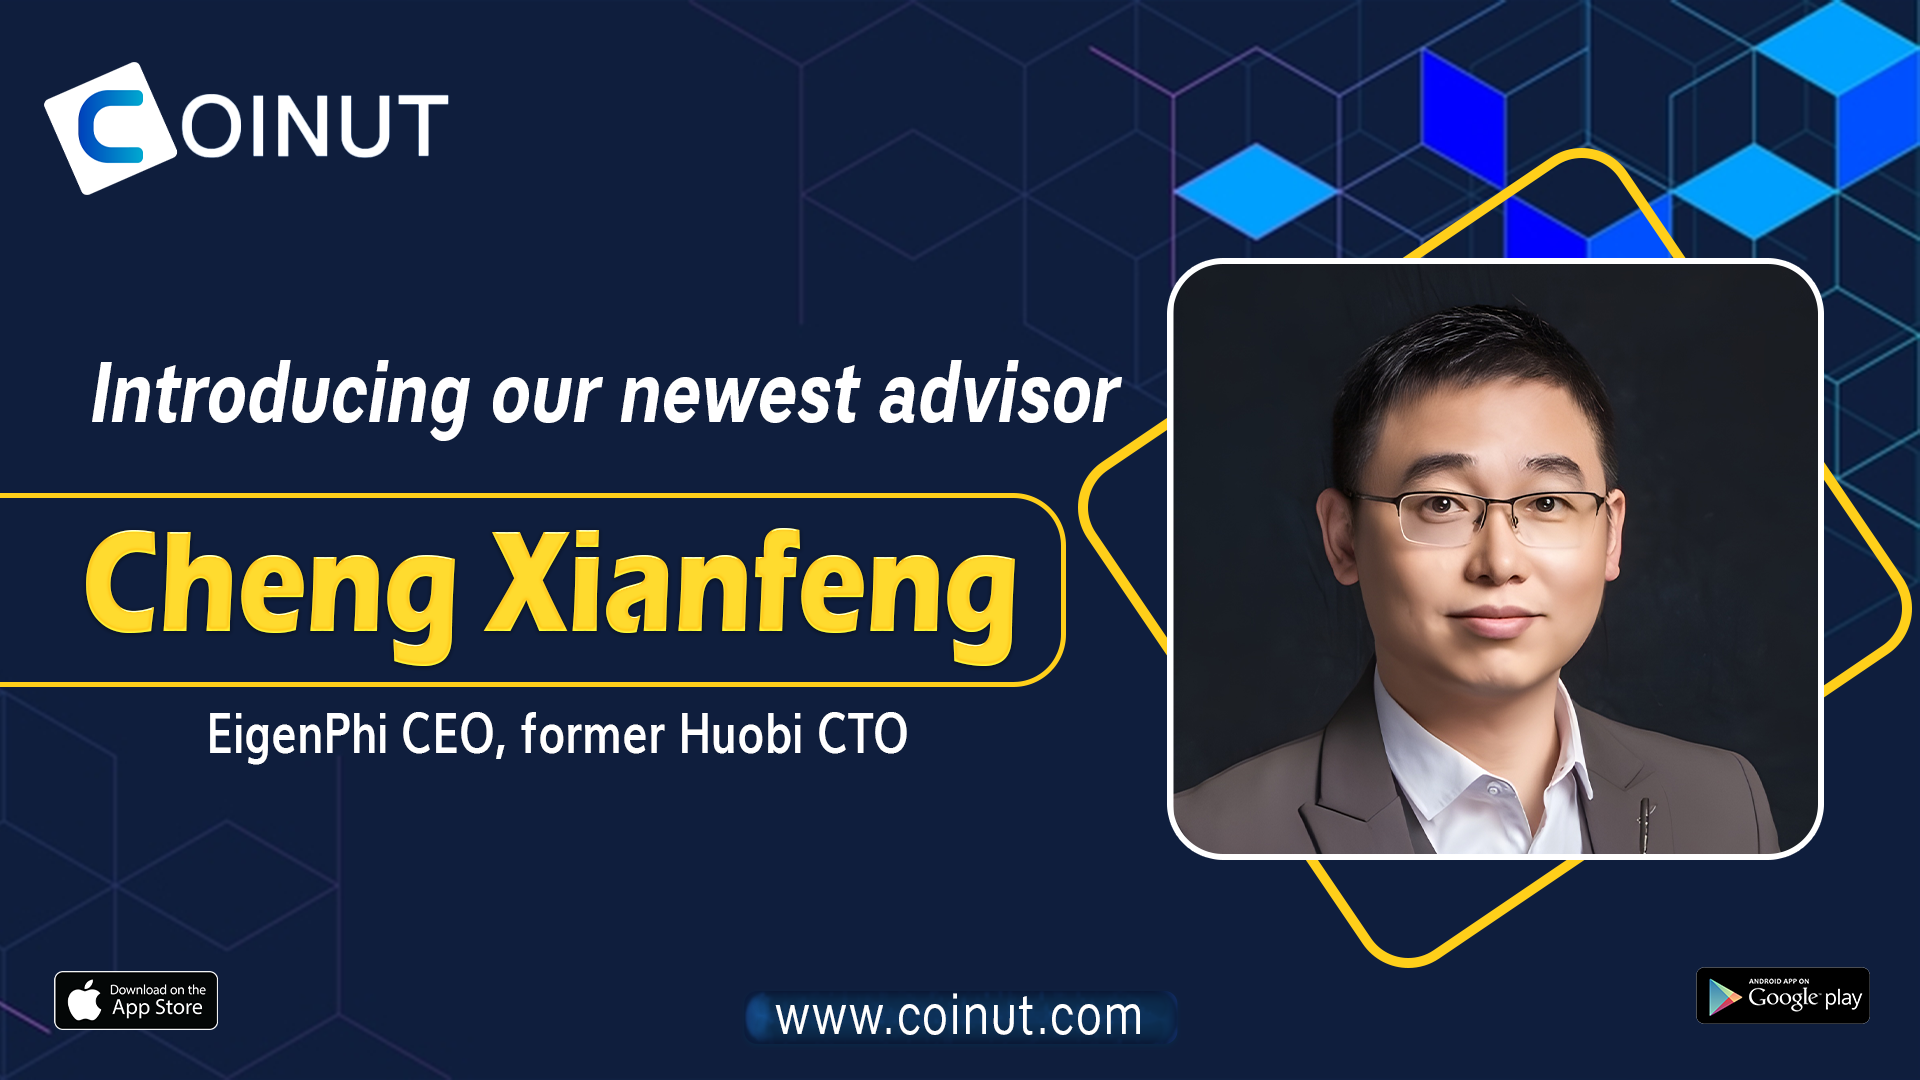 Cheng Xianfeng, former CTO of Huobi, a top-3 crypto exchange, joined Coinut as an advisor